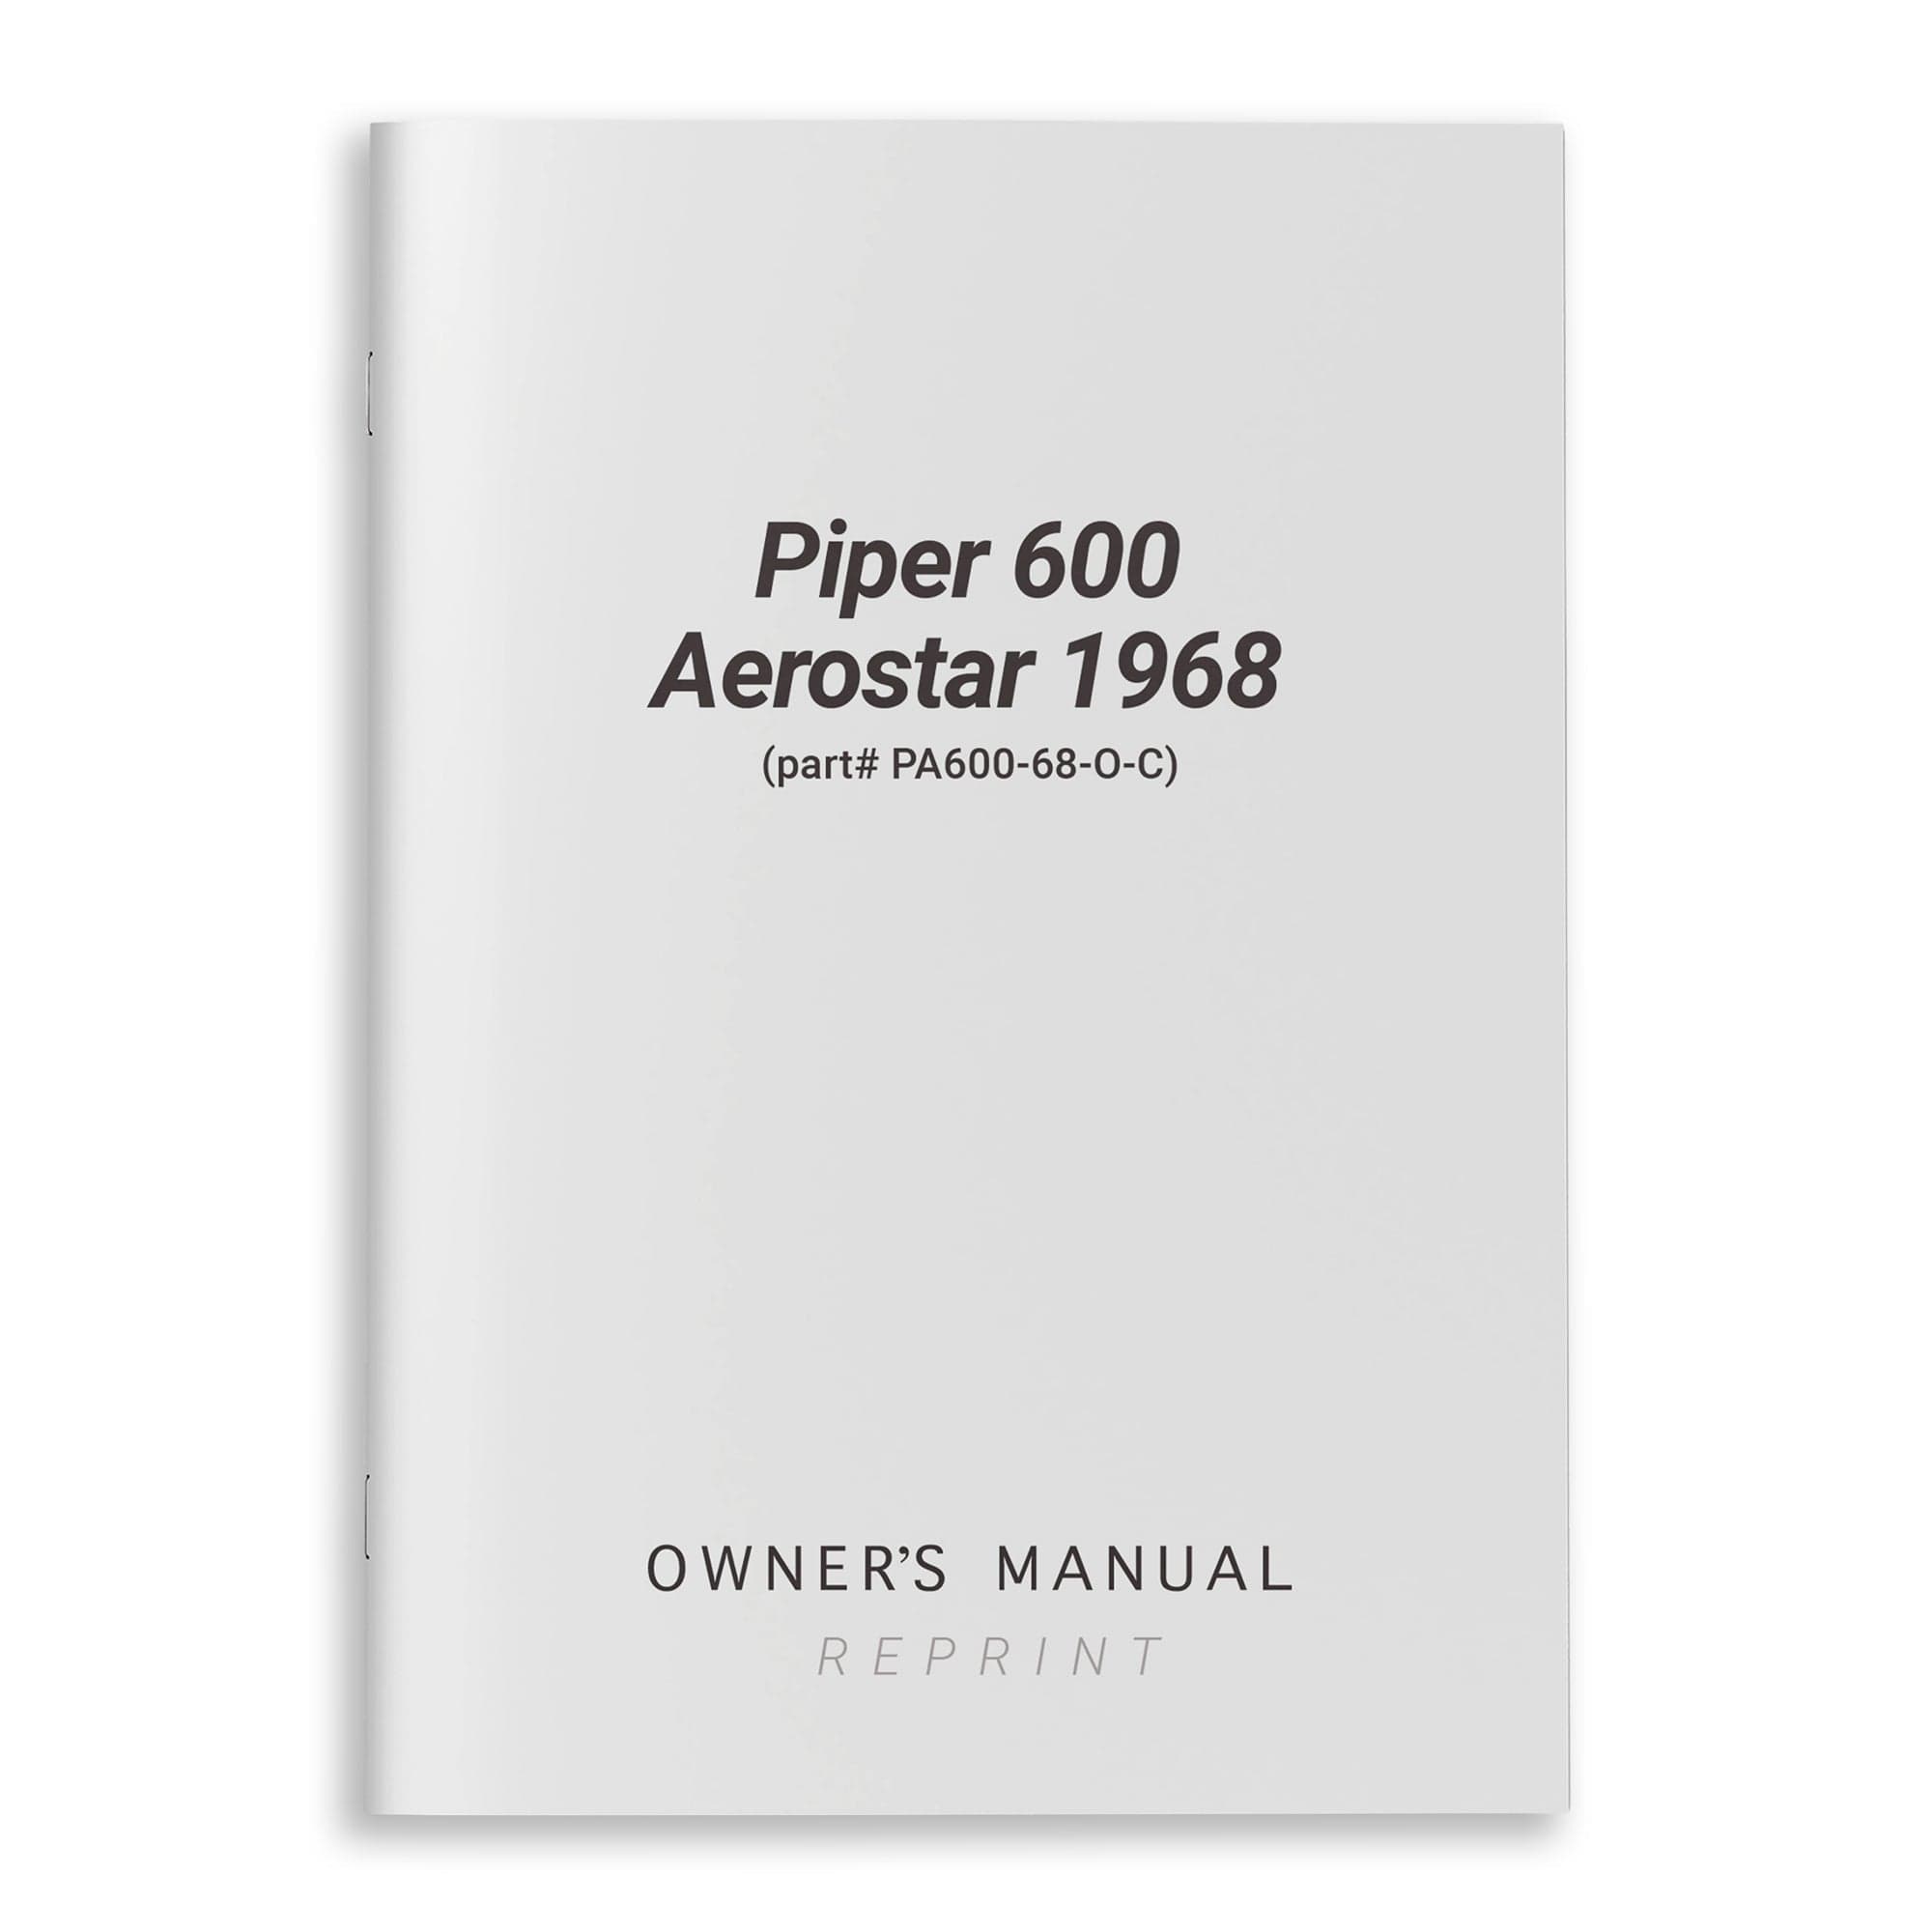 Piper 600 Aerostar 1968 Owner's Manual (part# PA600-68-O-C)